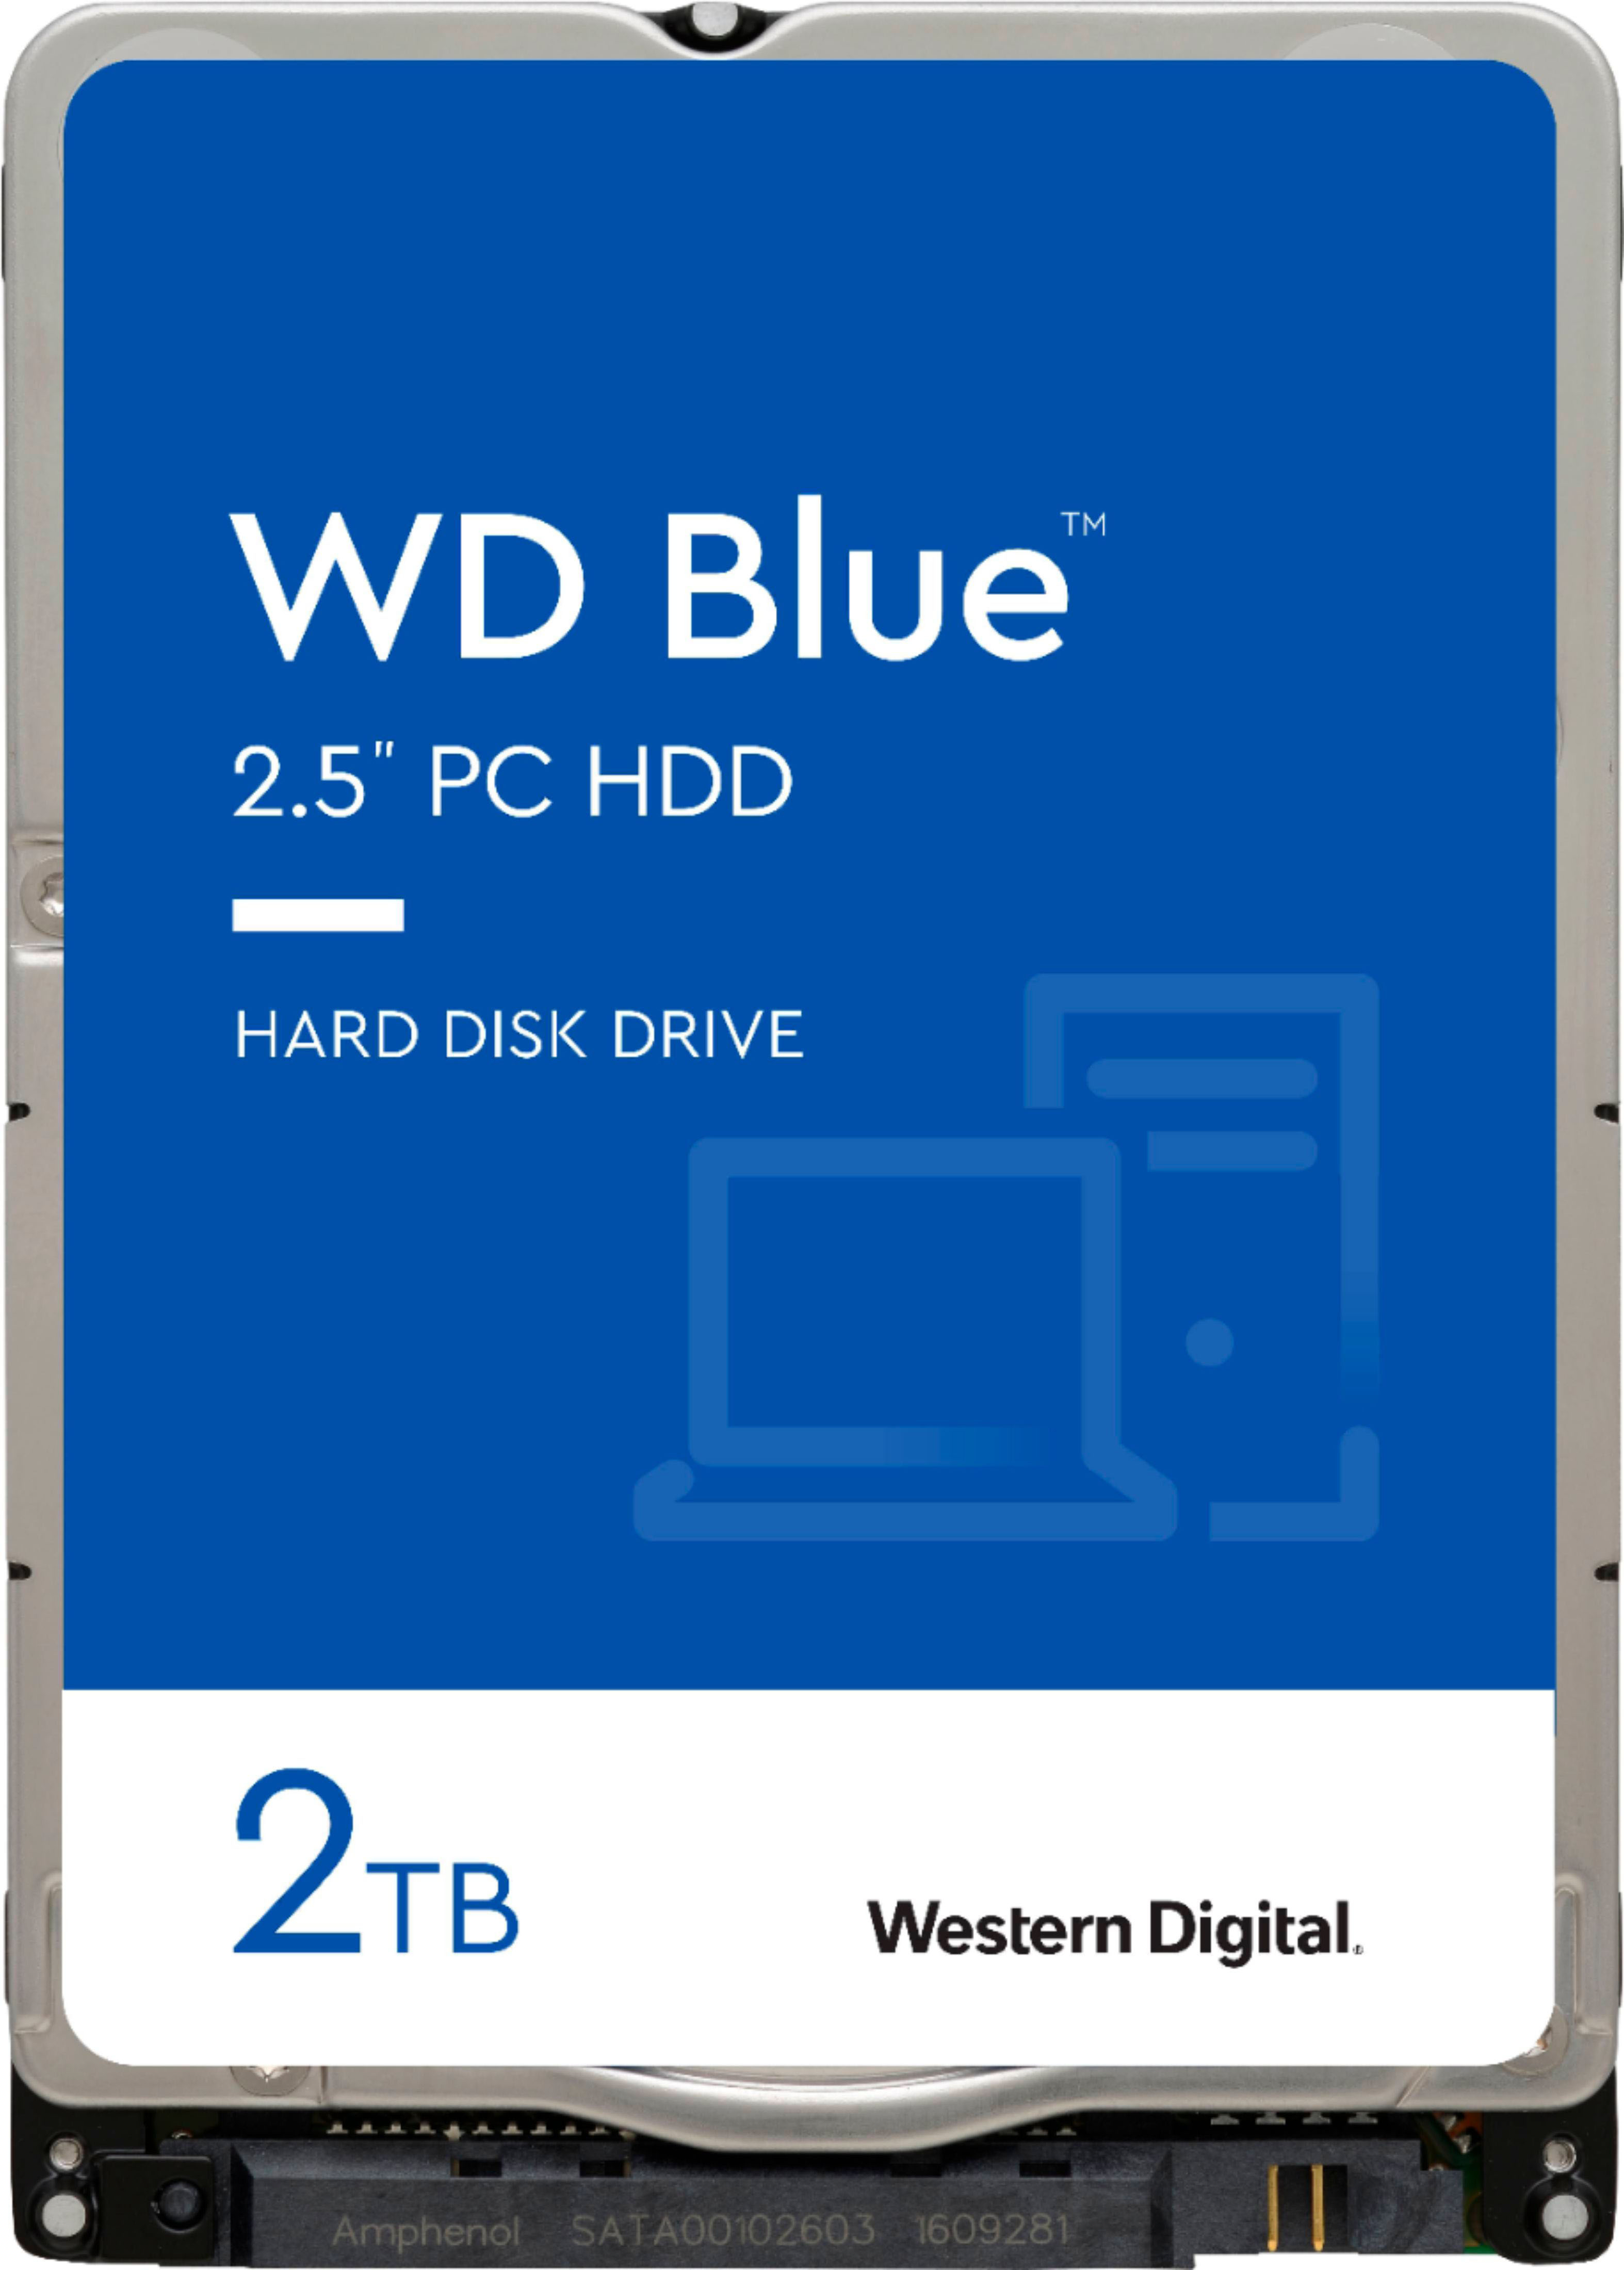 WD Blue 2TB Internal SATA Drive for Laptops WDBMYH0020BNC-WRSN - Best Buy